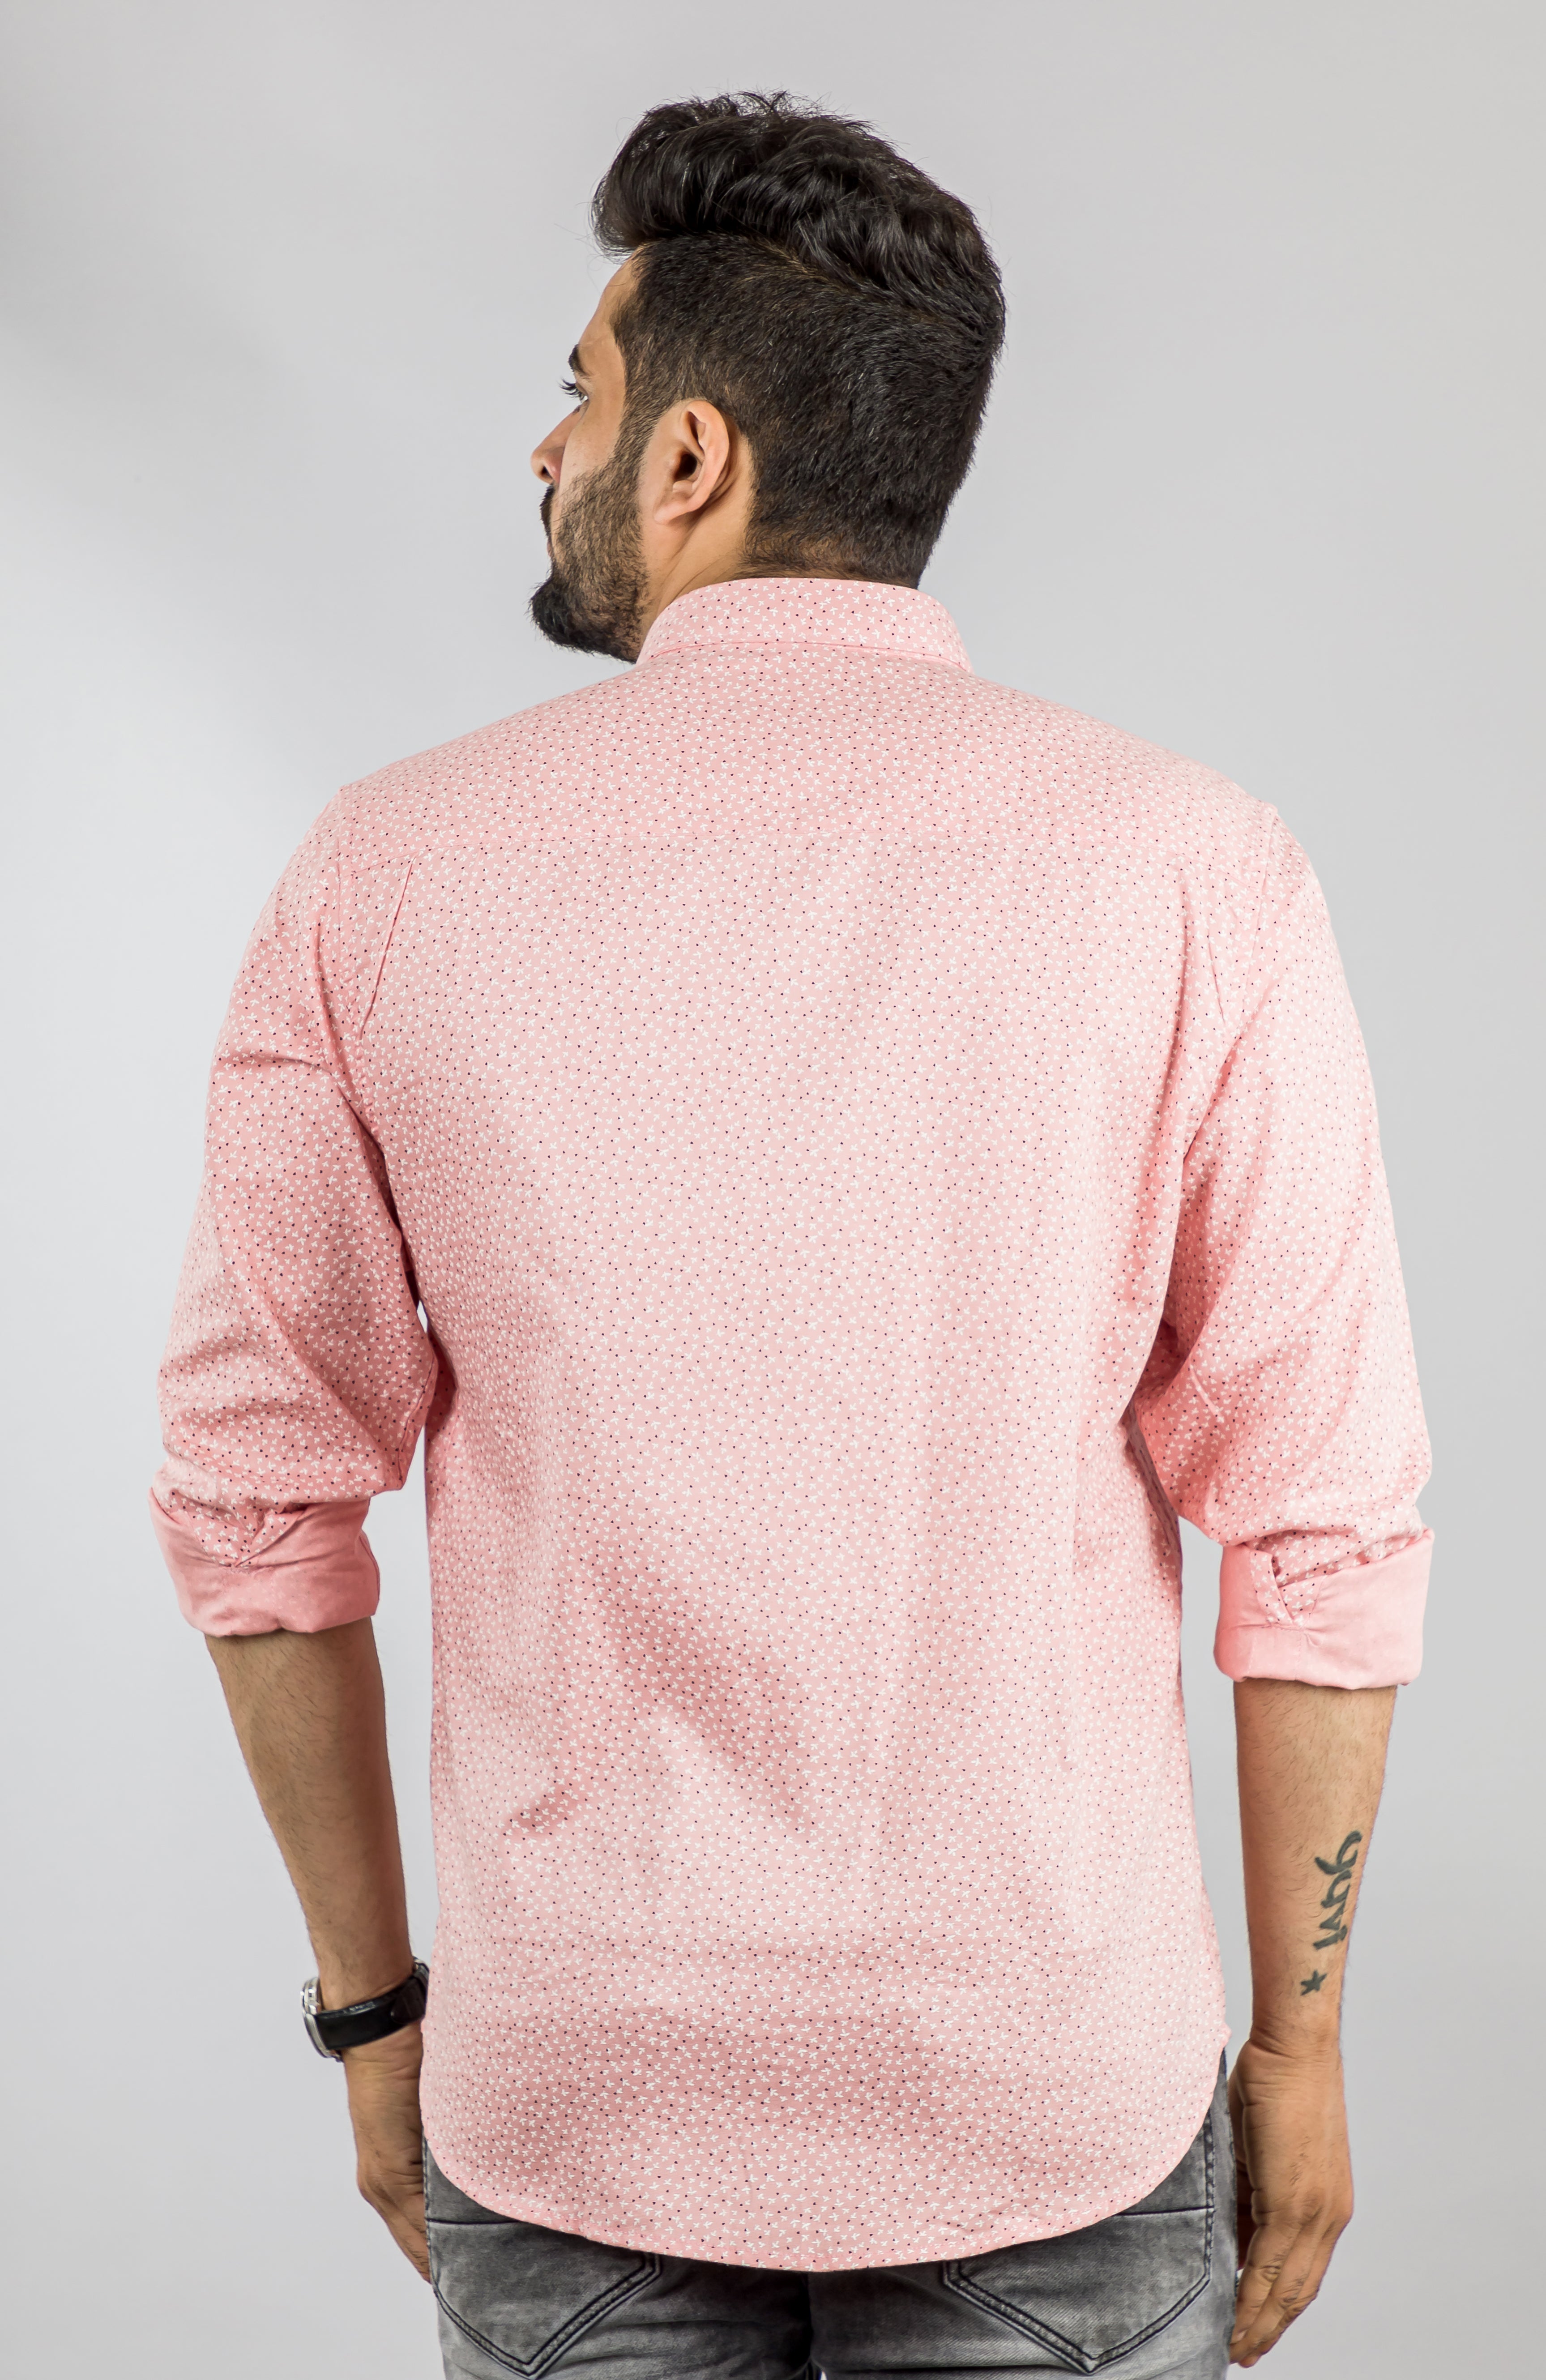 Men's Taffy Pink Printed Shirt